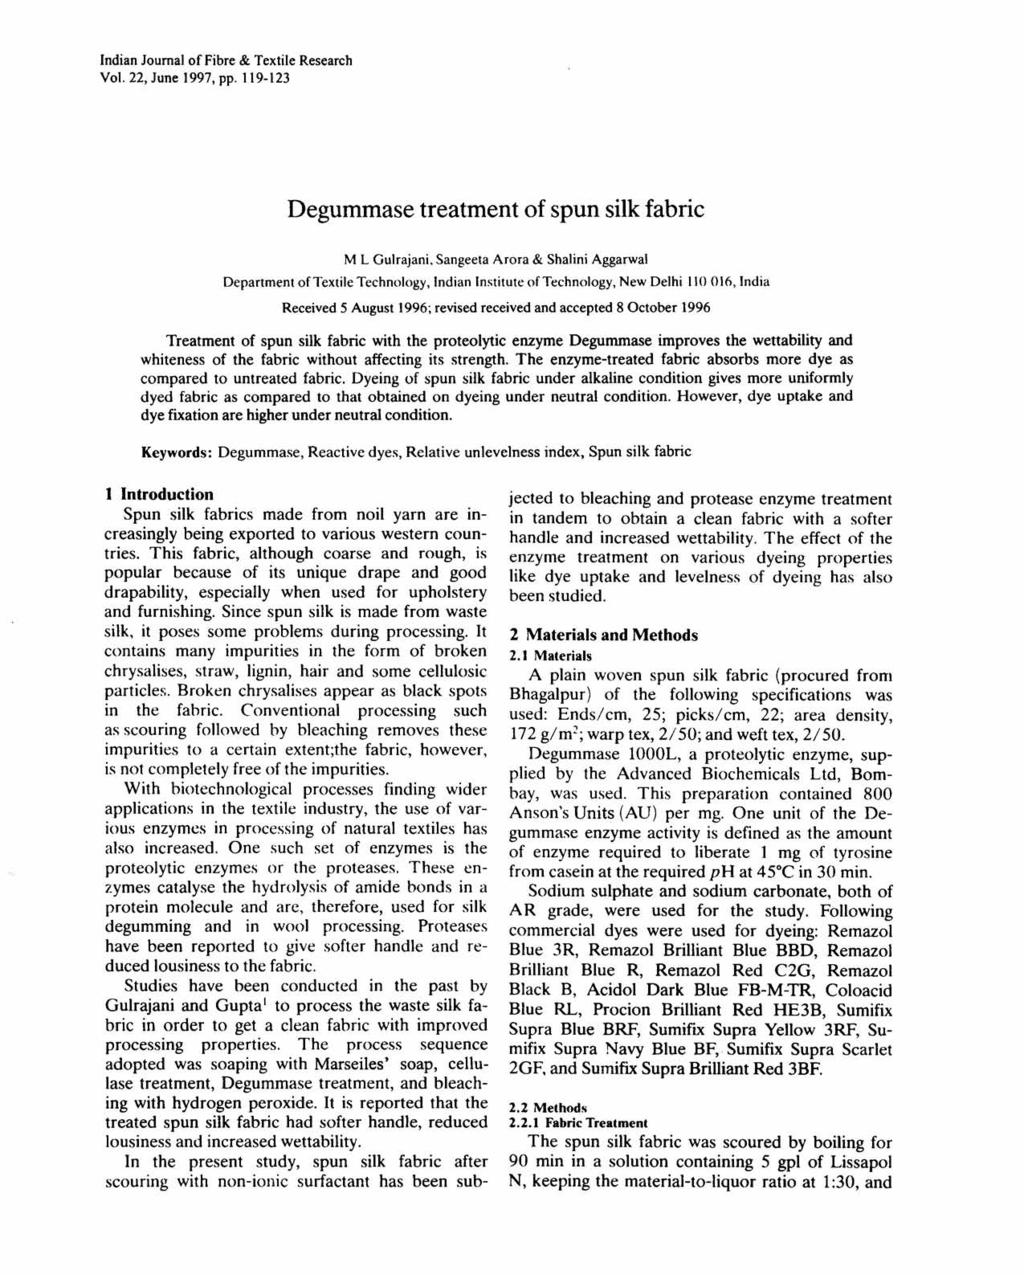 Indian Journal of Fibre & Textile Research Vol. 22, June 1997, pp. 119-123 Degummase treatment of spun silk fabric Department M L Gulrajani.